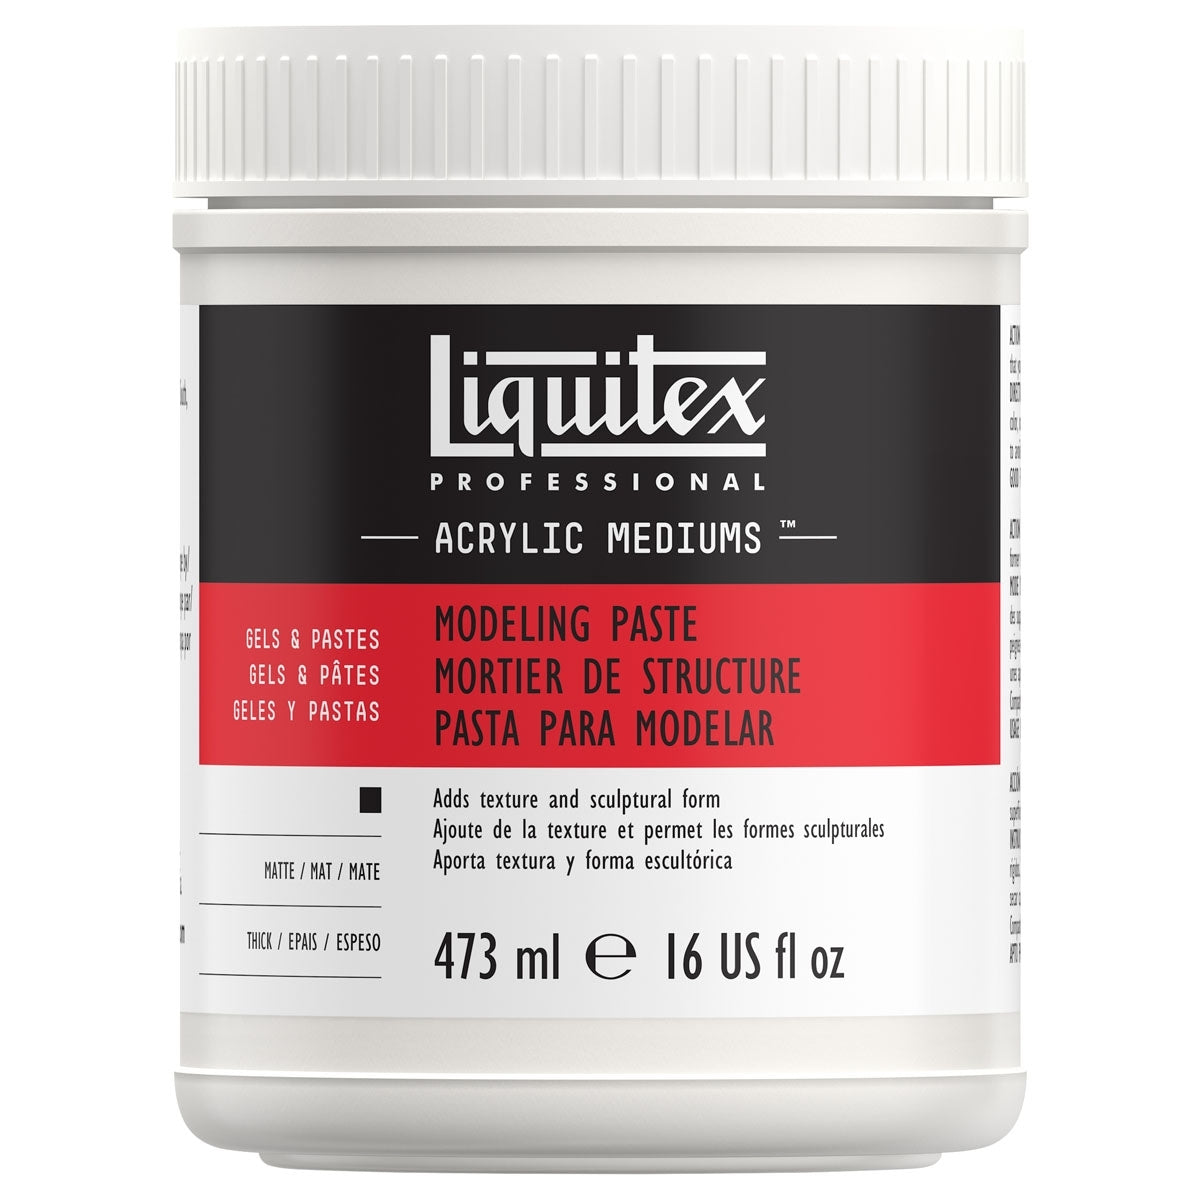 Liquitex - Modélisation de la pâte 473 ml